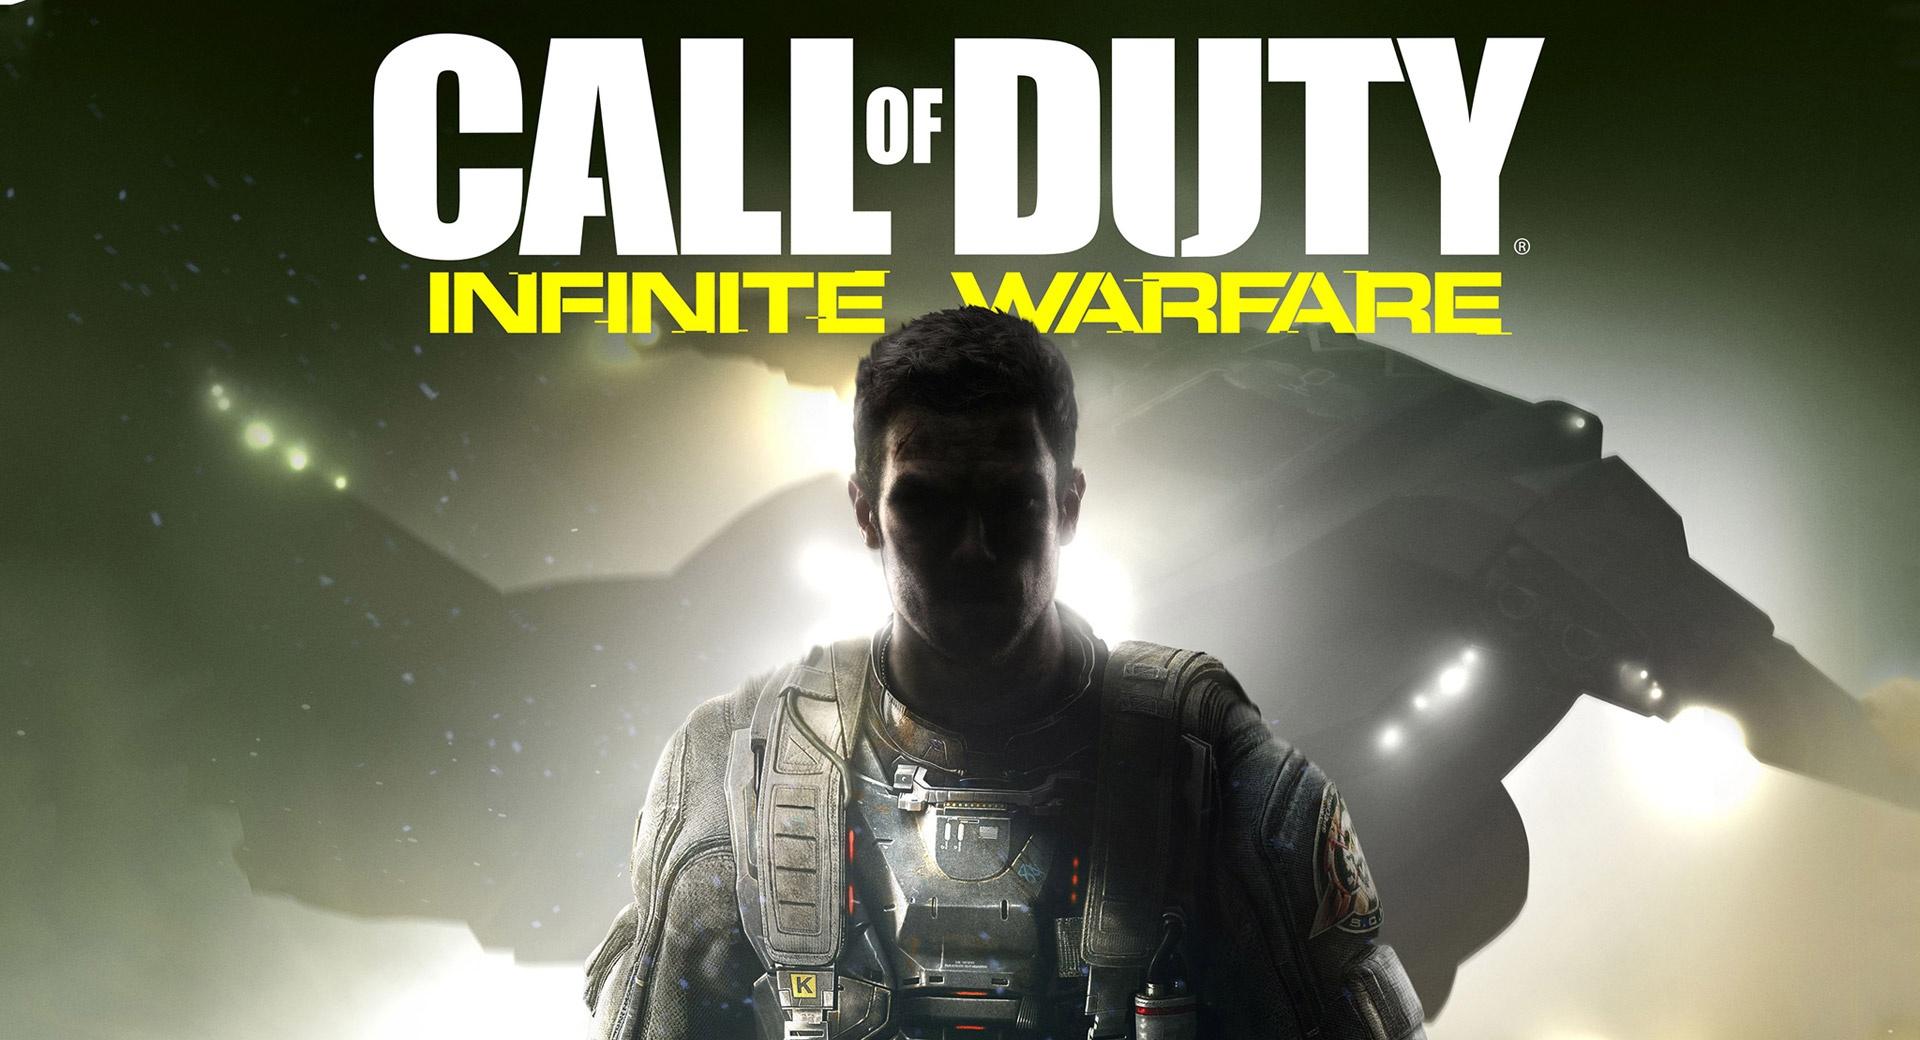 Call Of Duty Infinite Warfare Keyart at 1600 x 1200 size wallpapers HD quality